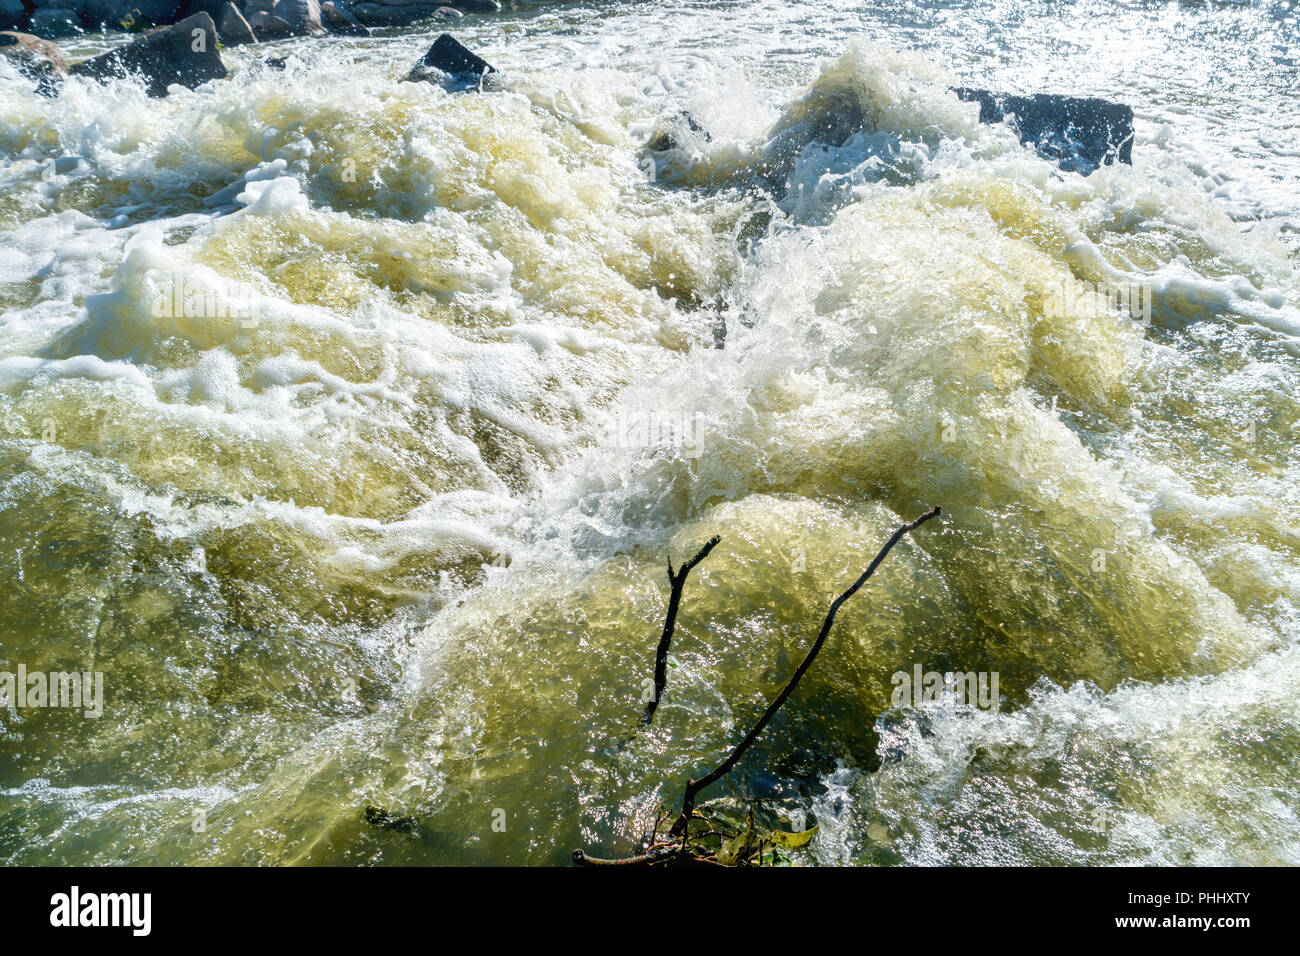 Fließende Fluss Wasser mit grossen Felsen Stockfoto